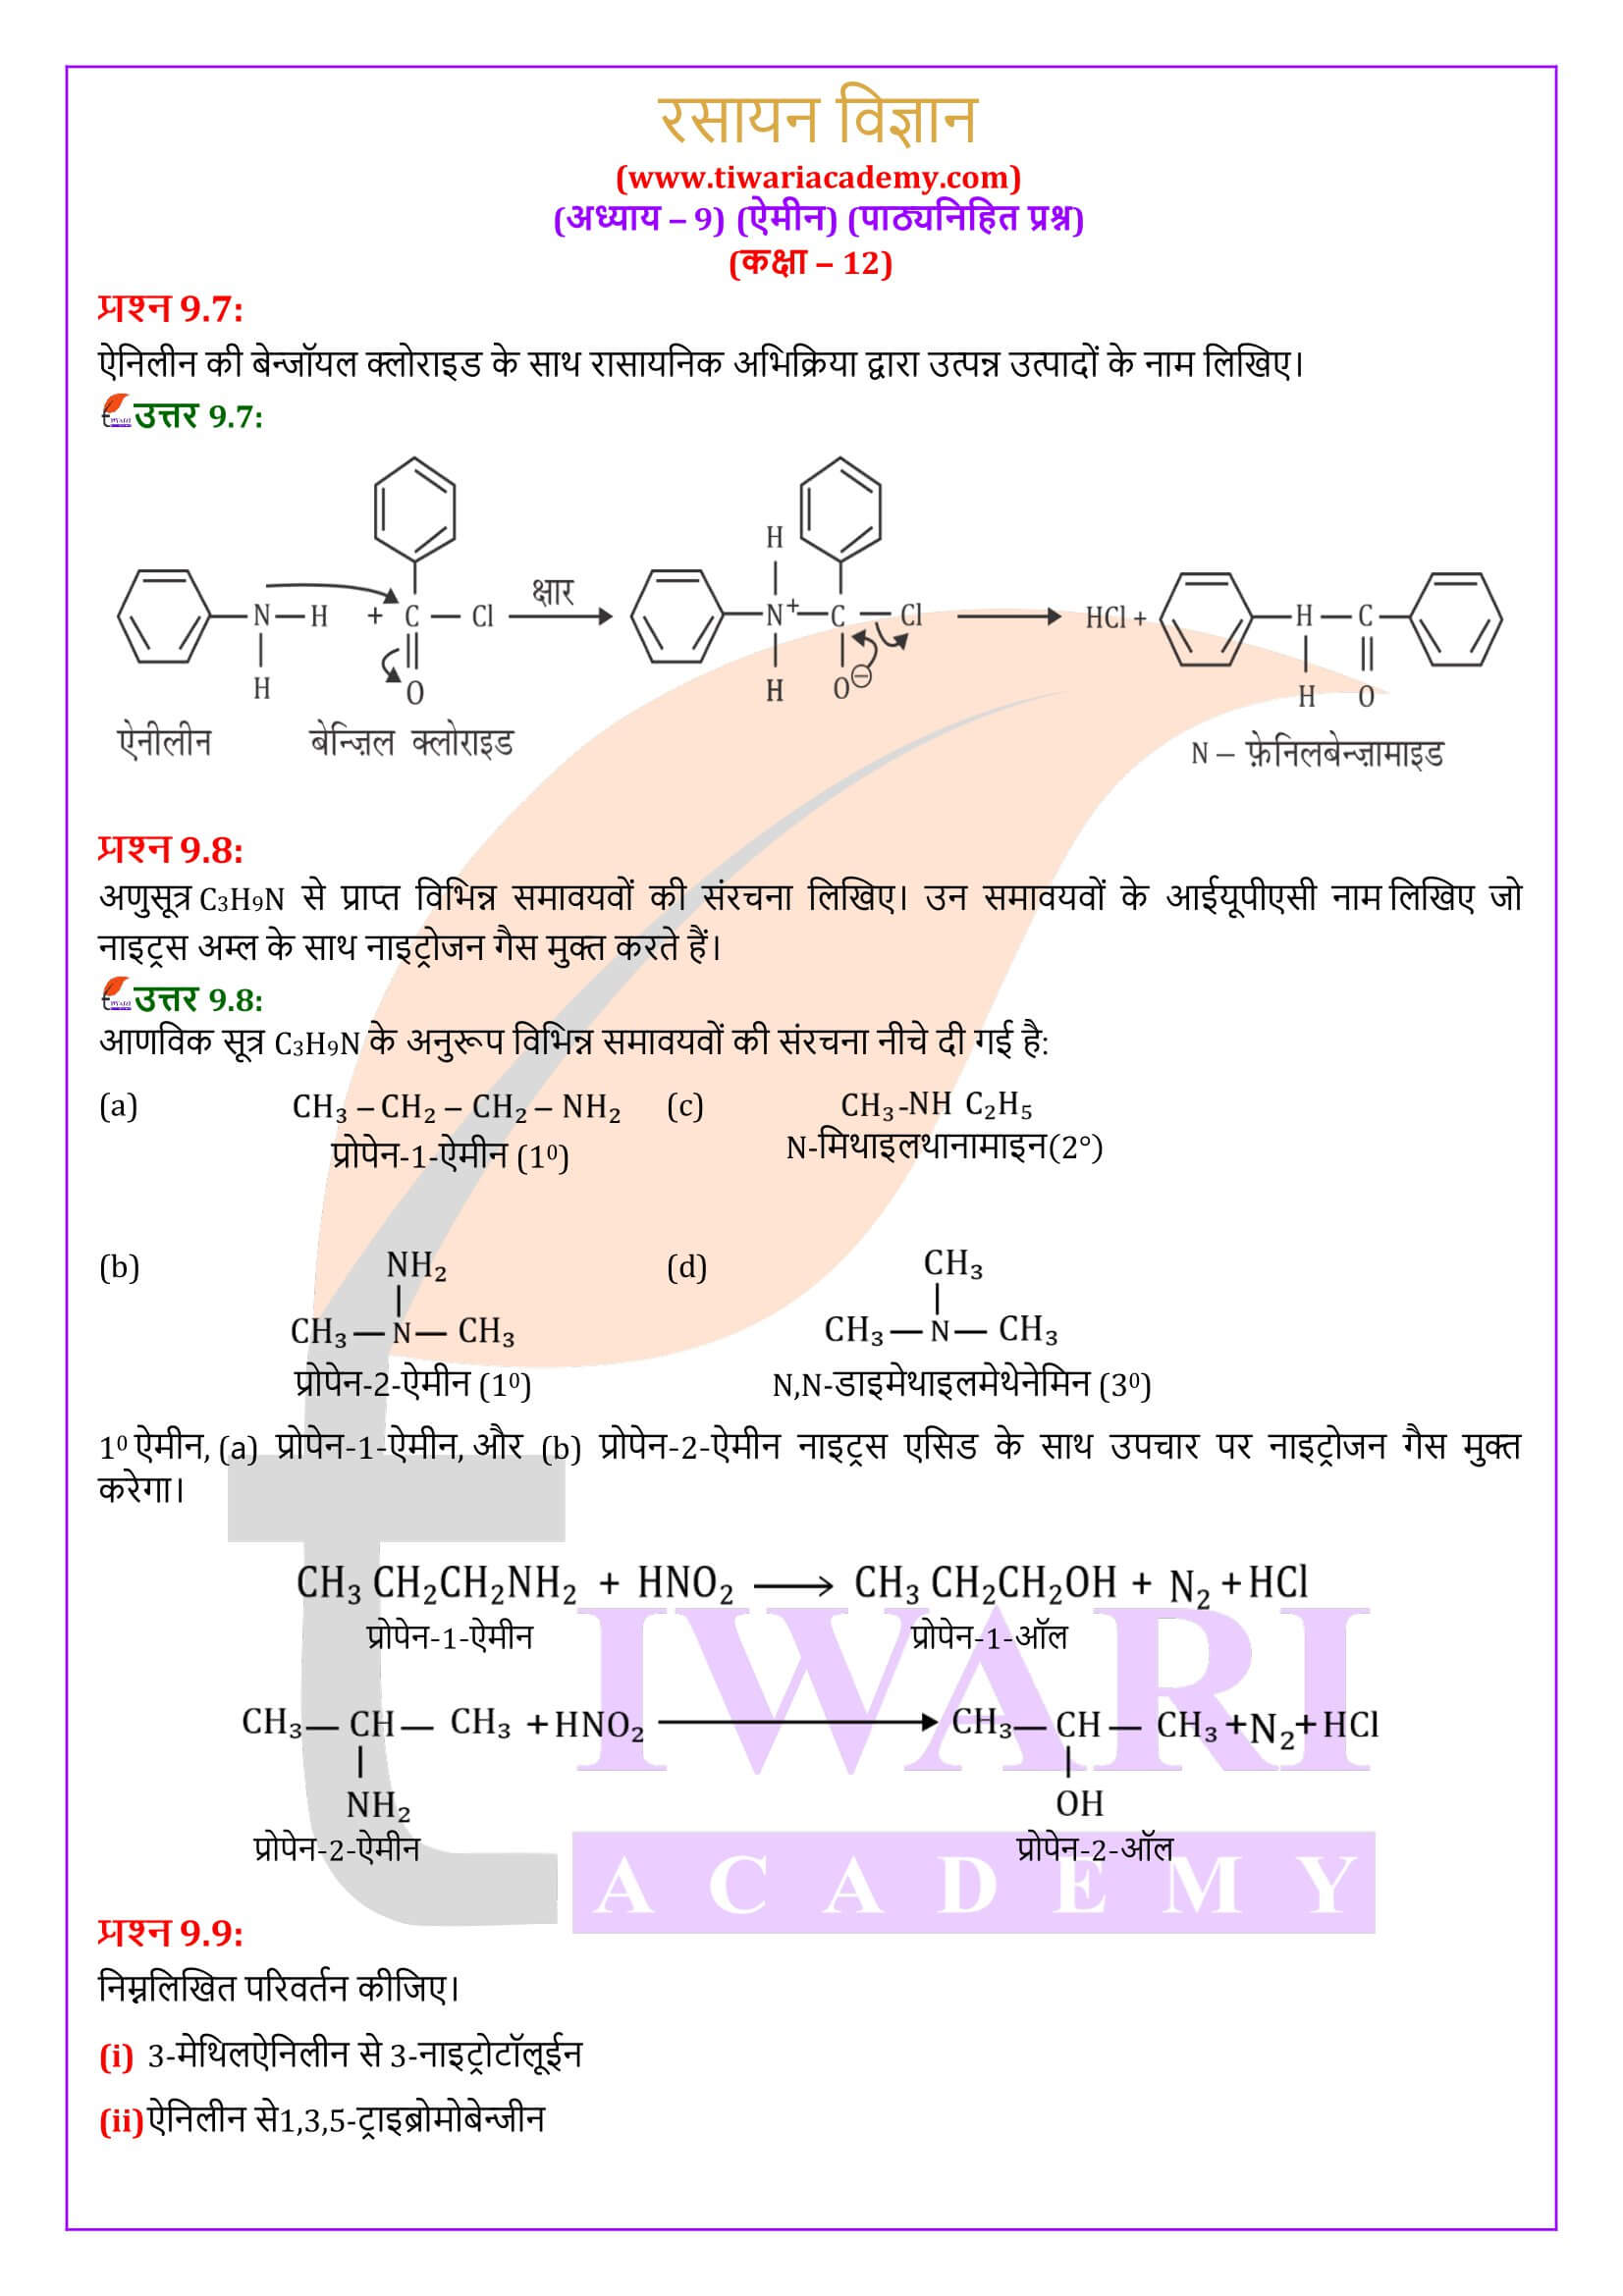 कक्षा 12 रसायन विज्ञान अध्याय 9 पाठ्यनिहित के उत्तर